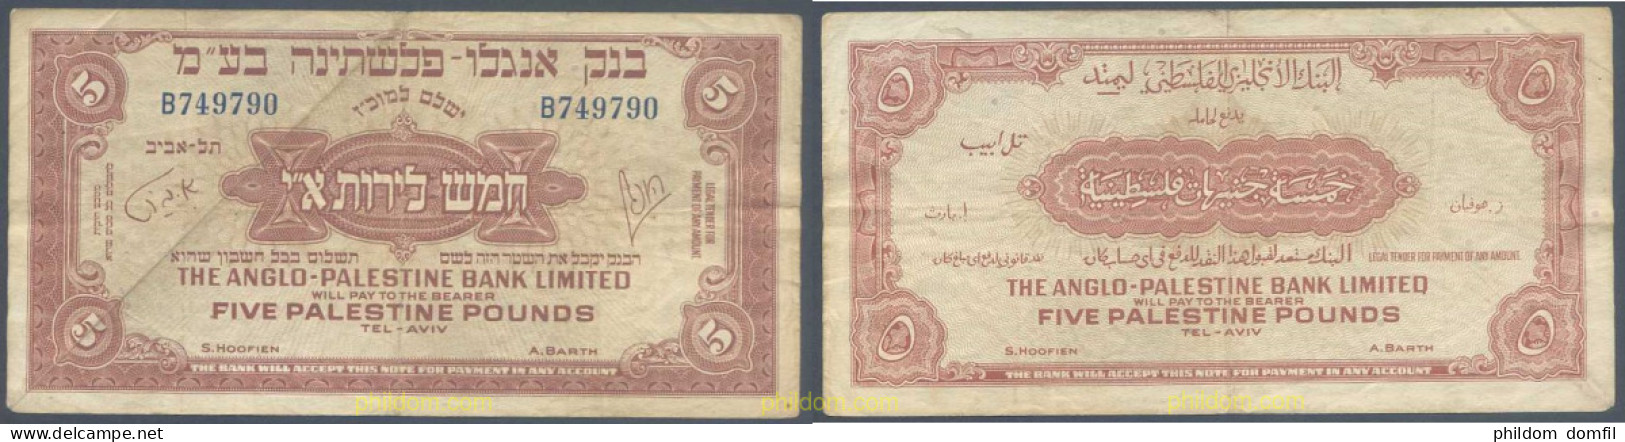 5369 ISRAEL 1948 ISRAEL 5 LIROT POUNDS PALESTINE 1948 - Israel